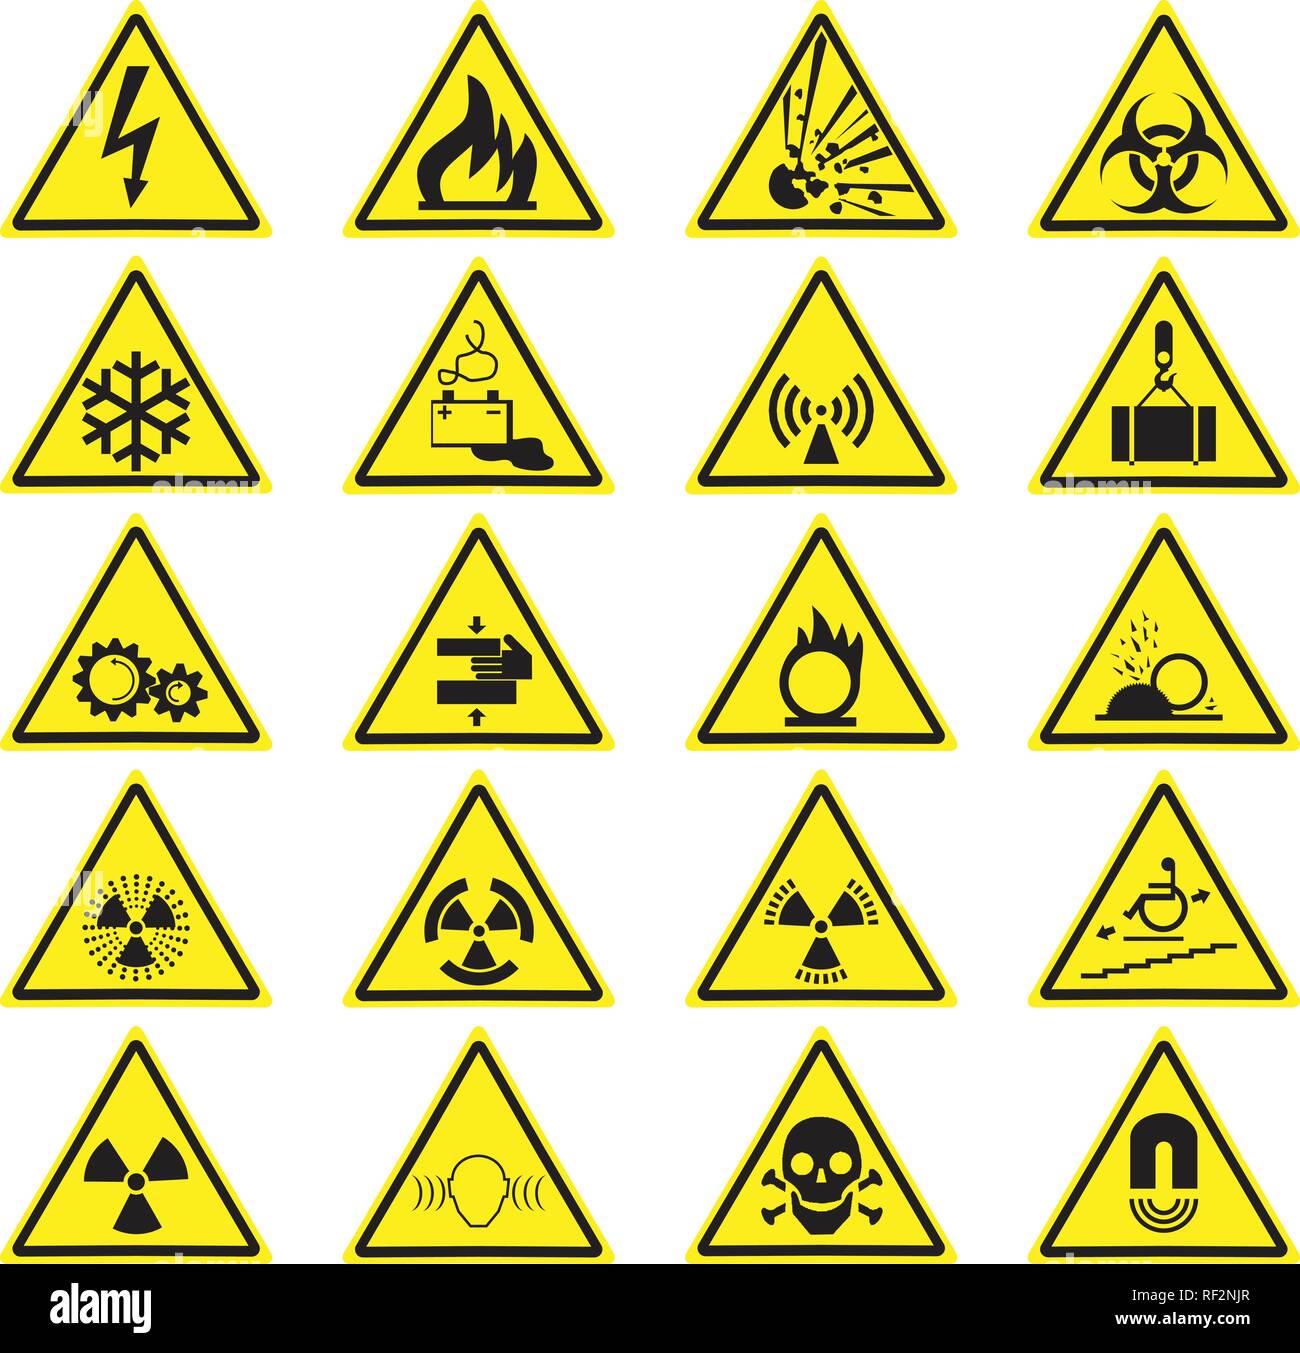 Warning Signs Yellow Triangle Alerts Symbols Vector Image | Triangular ...